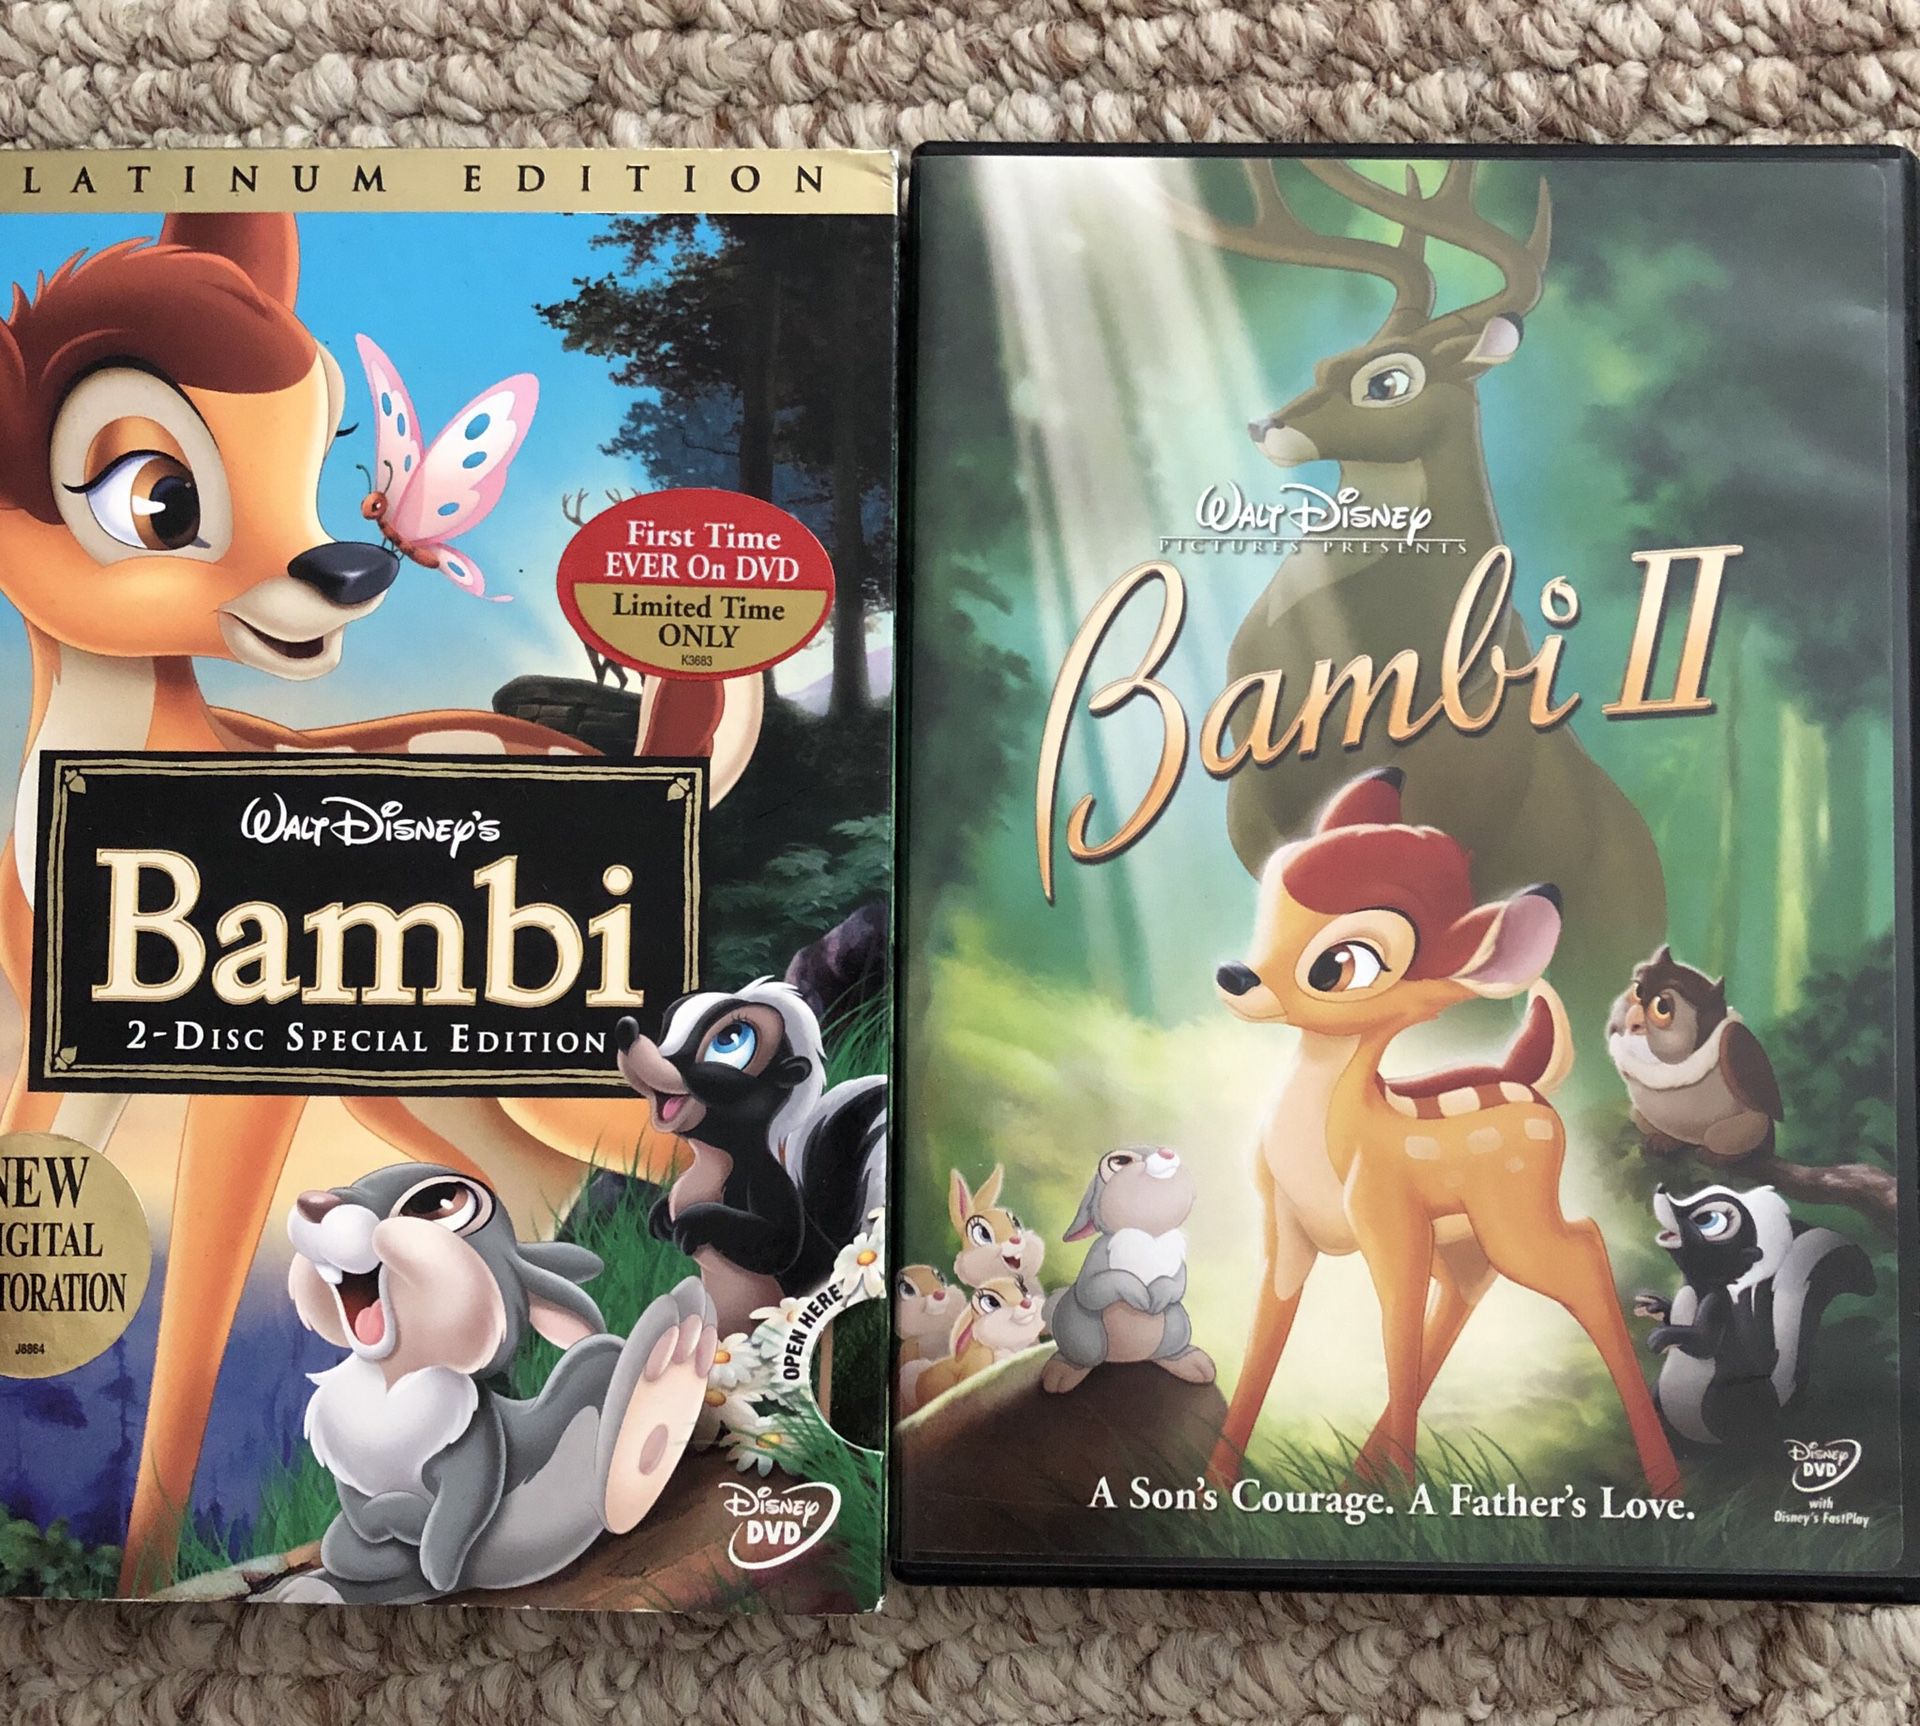 Bambi and Bambi II DVD’s